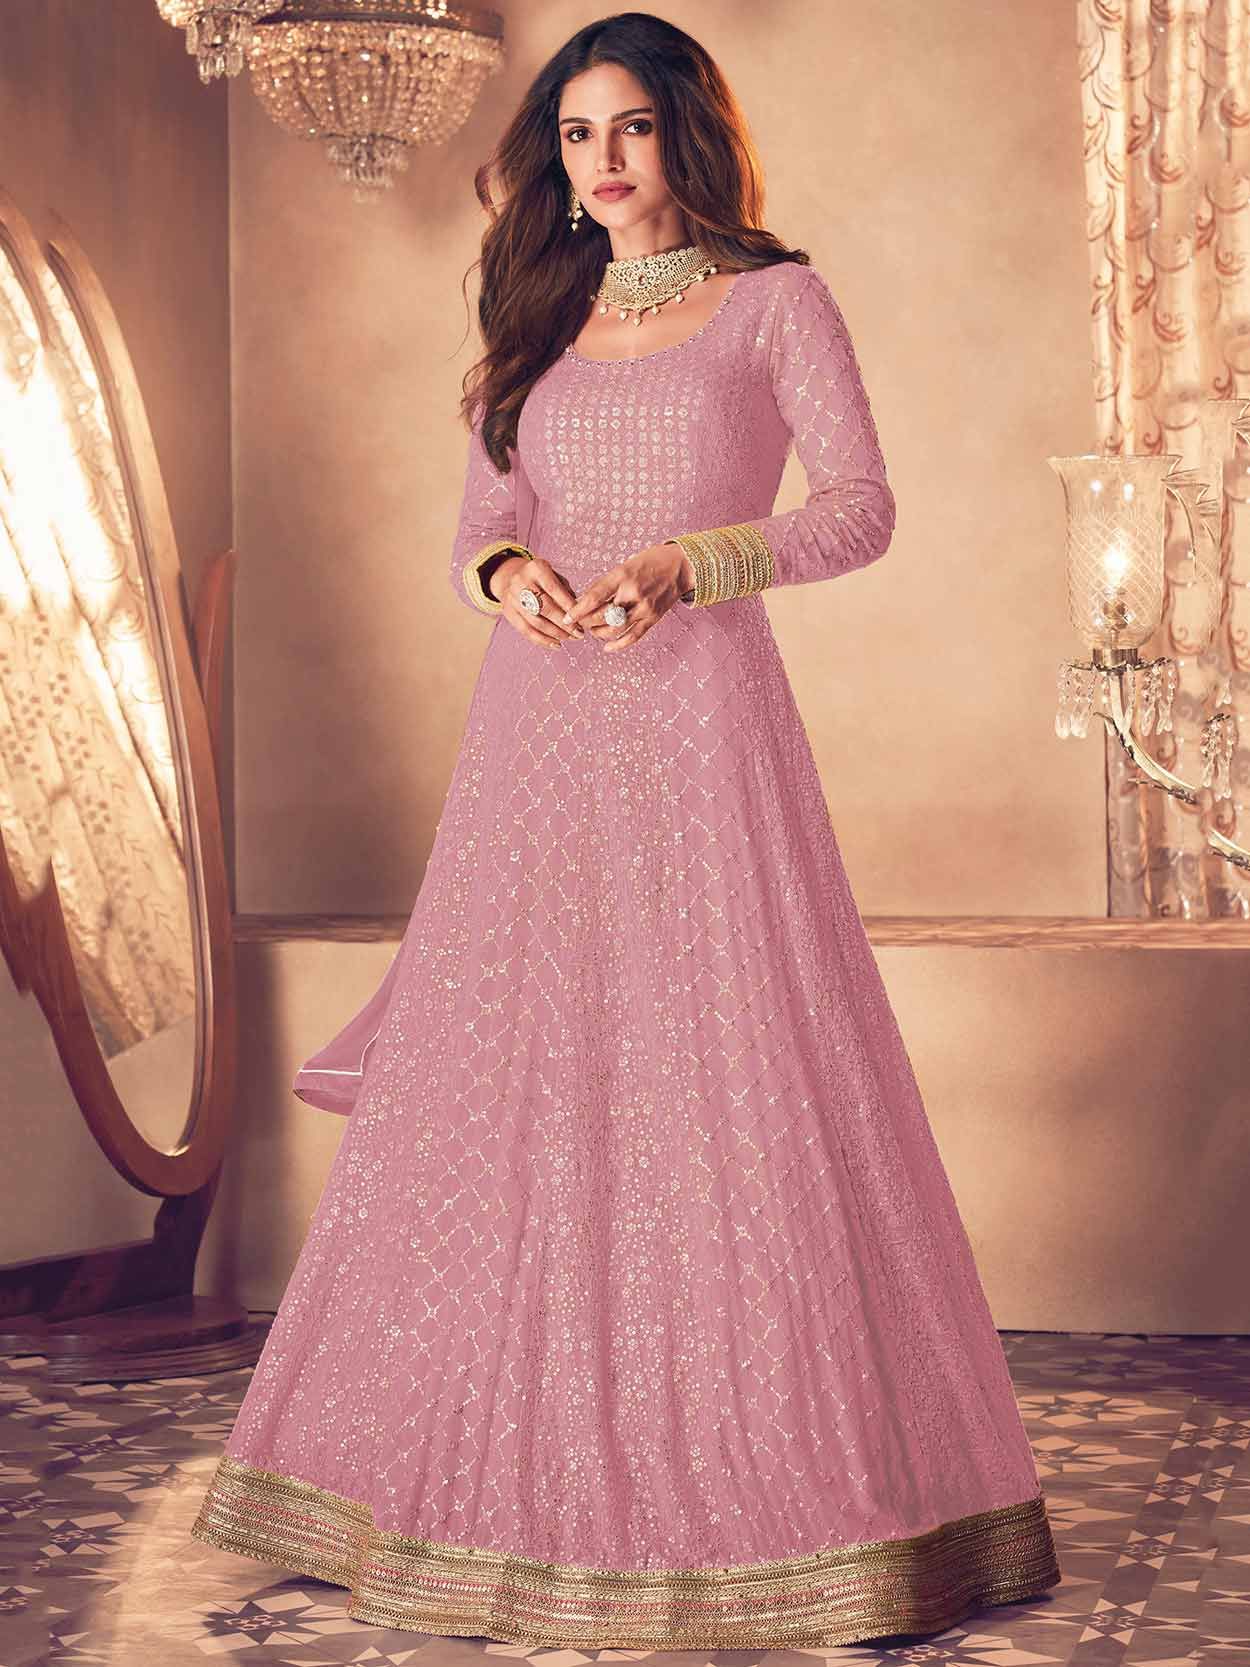 Attractive Pink Salwar Kameez Design That Suits Any Occasion | by Mita Nath  | Medium